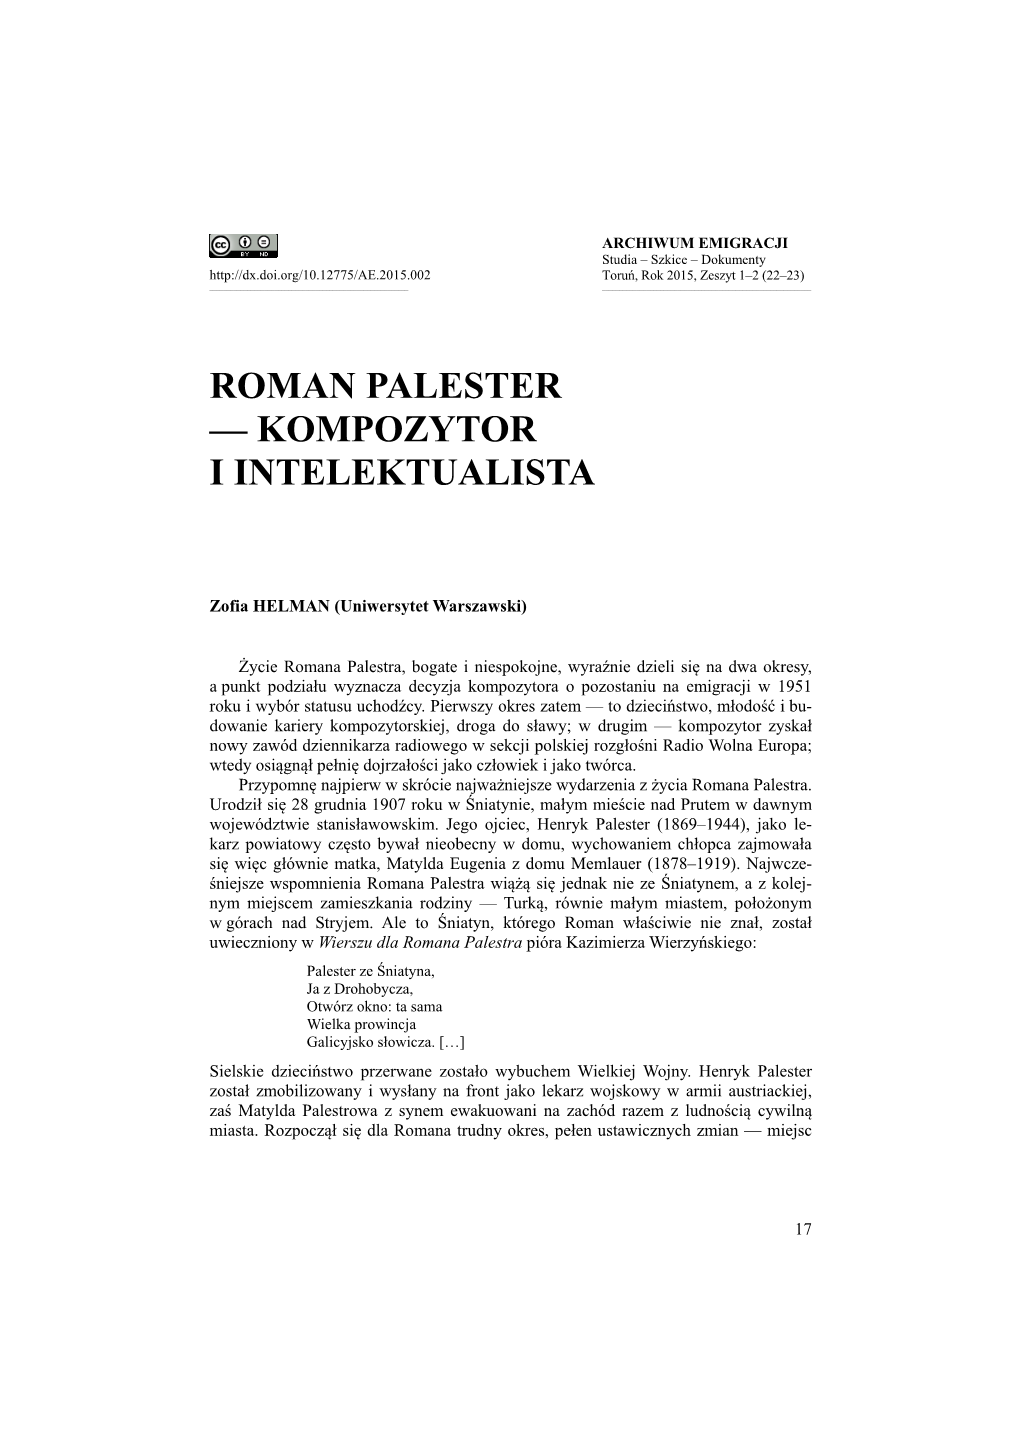 Roman Palester — Kompozytor I Intelektualista